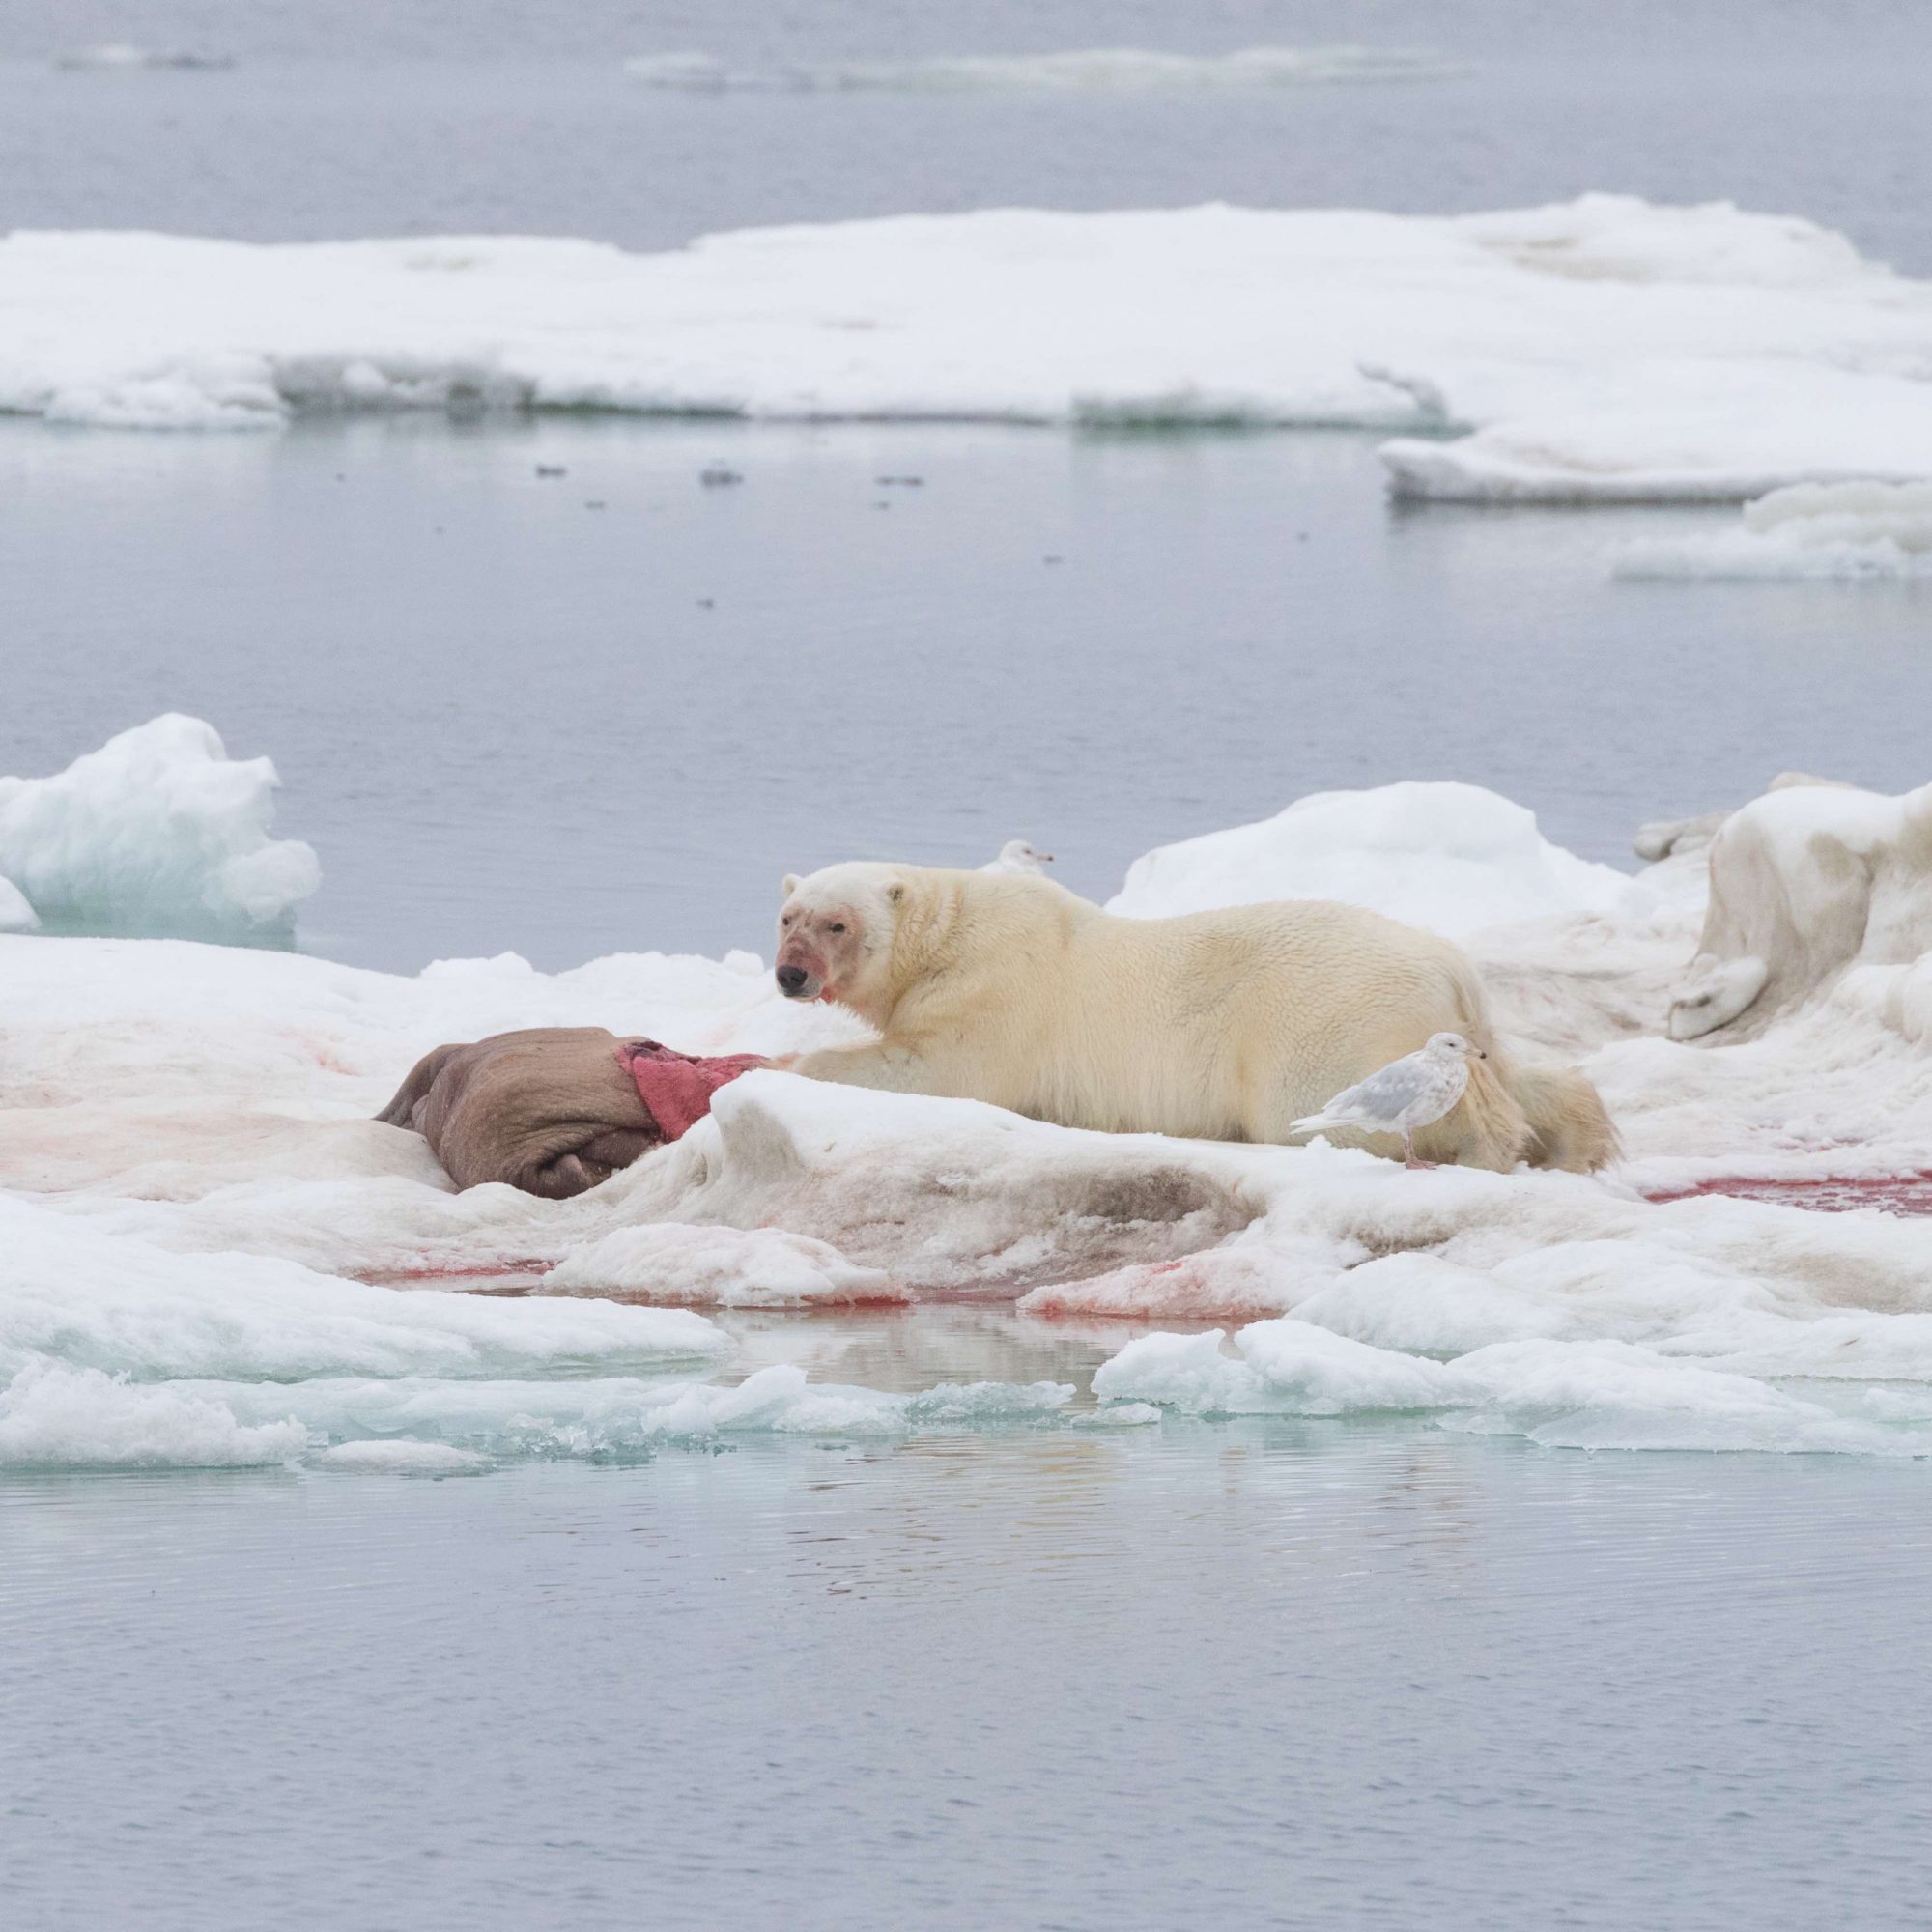 Three Polar Bears near a Walrus Carcass – Wrangel Island 2018